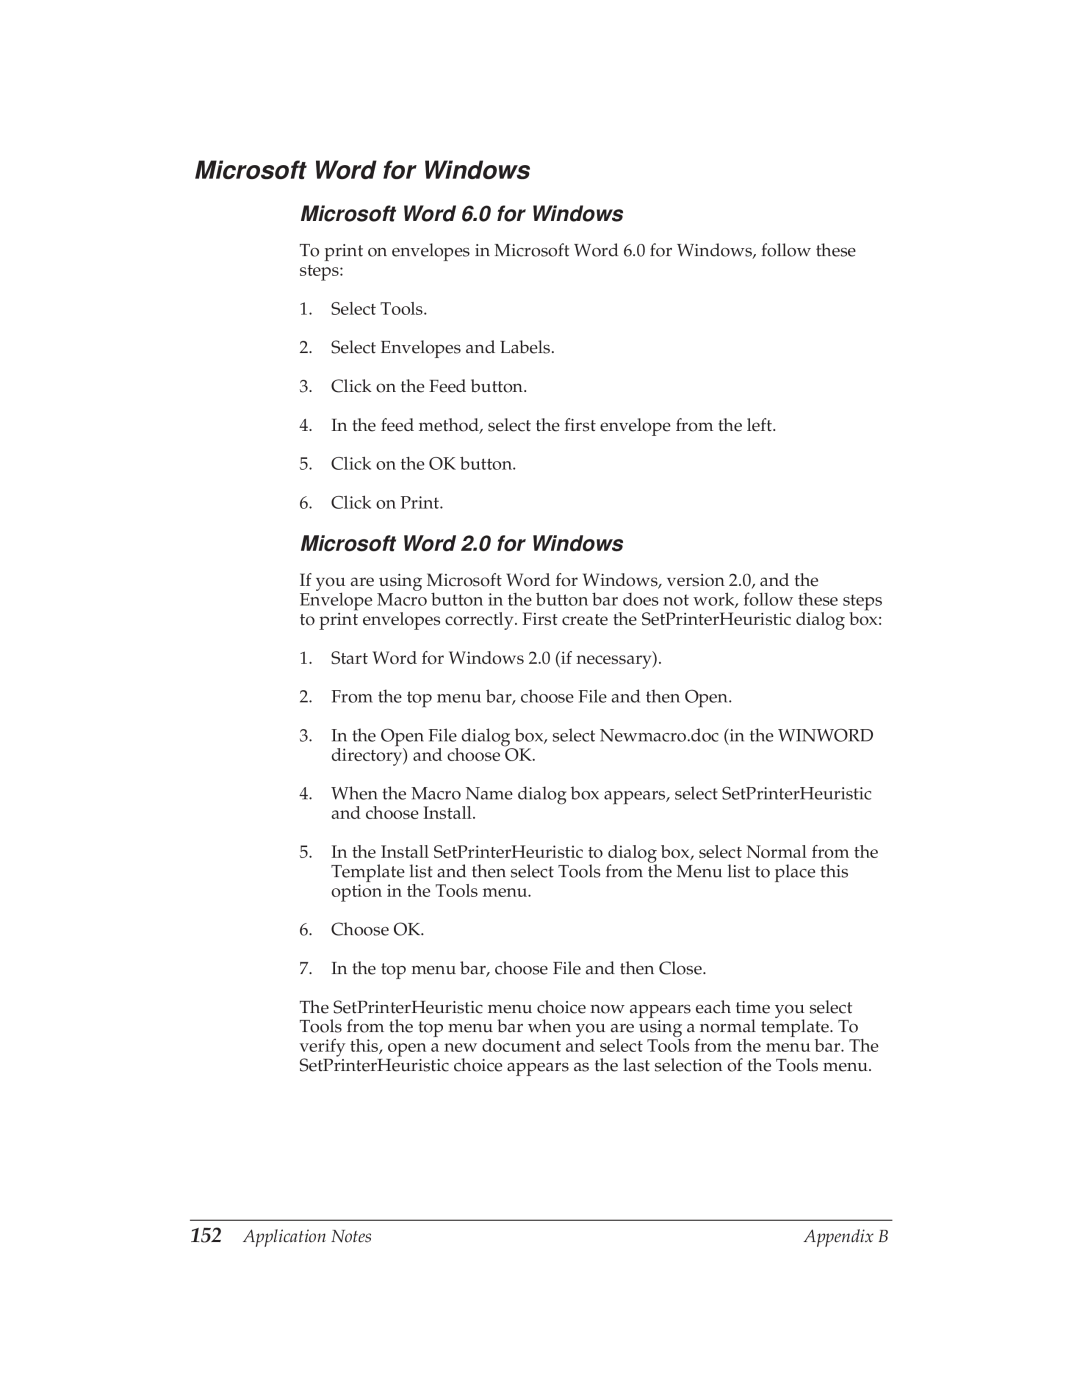 Canon BJ-30 manual Microsoft Word for Windows, Microsoft Word 6.0 for Windows, Microsoft Word 2.0 for Windows 